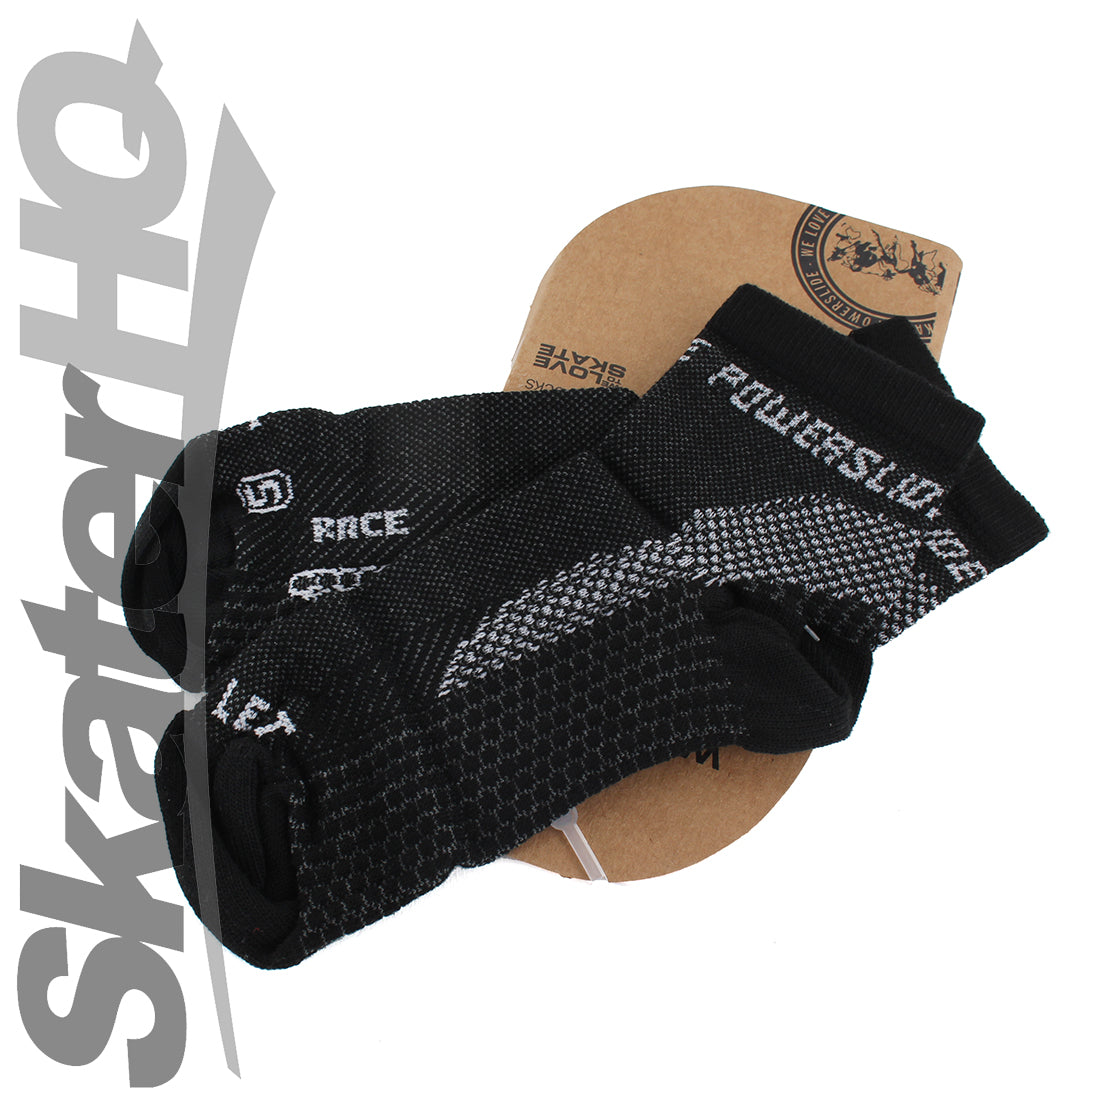 Powerslide Race Socks - 13C-4US EU31-35 Apparel Socks